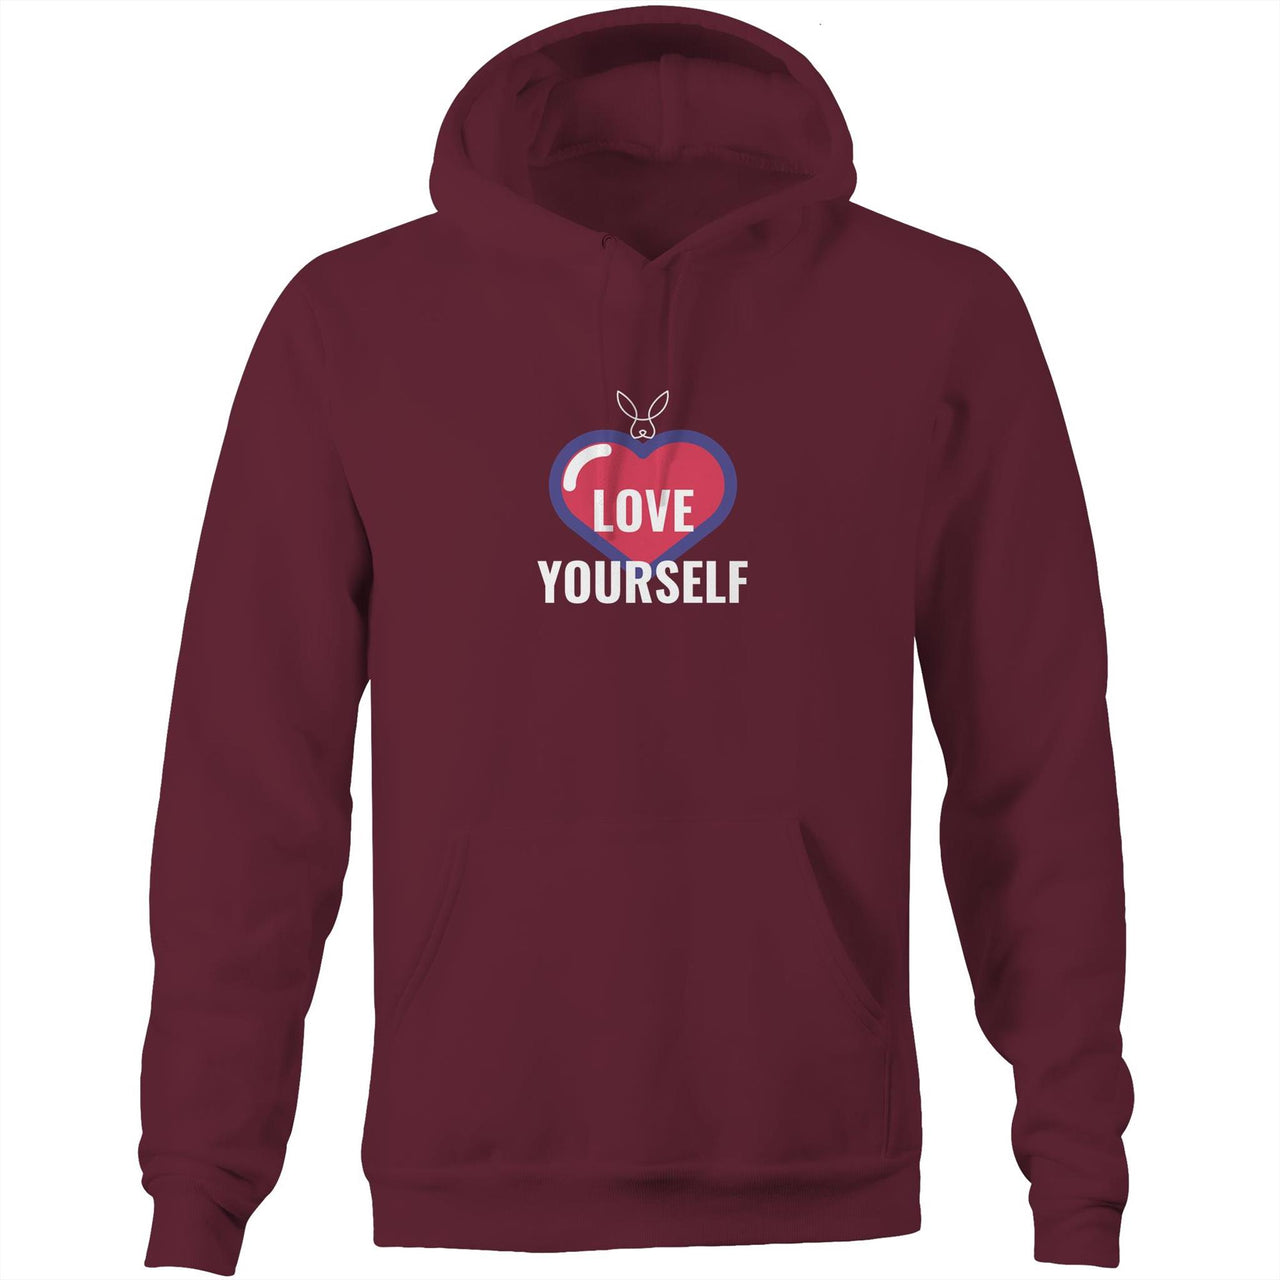 Love Yourself Pocket Hoodie Sweatshirt. unisex mens womens berry